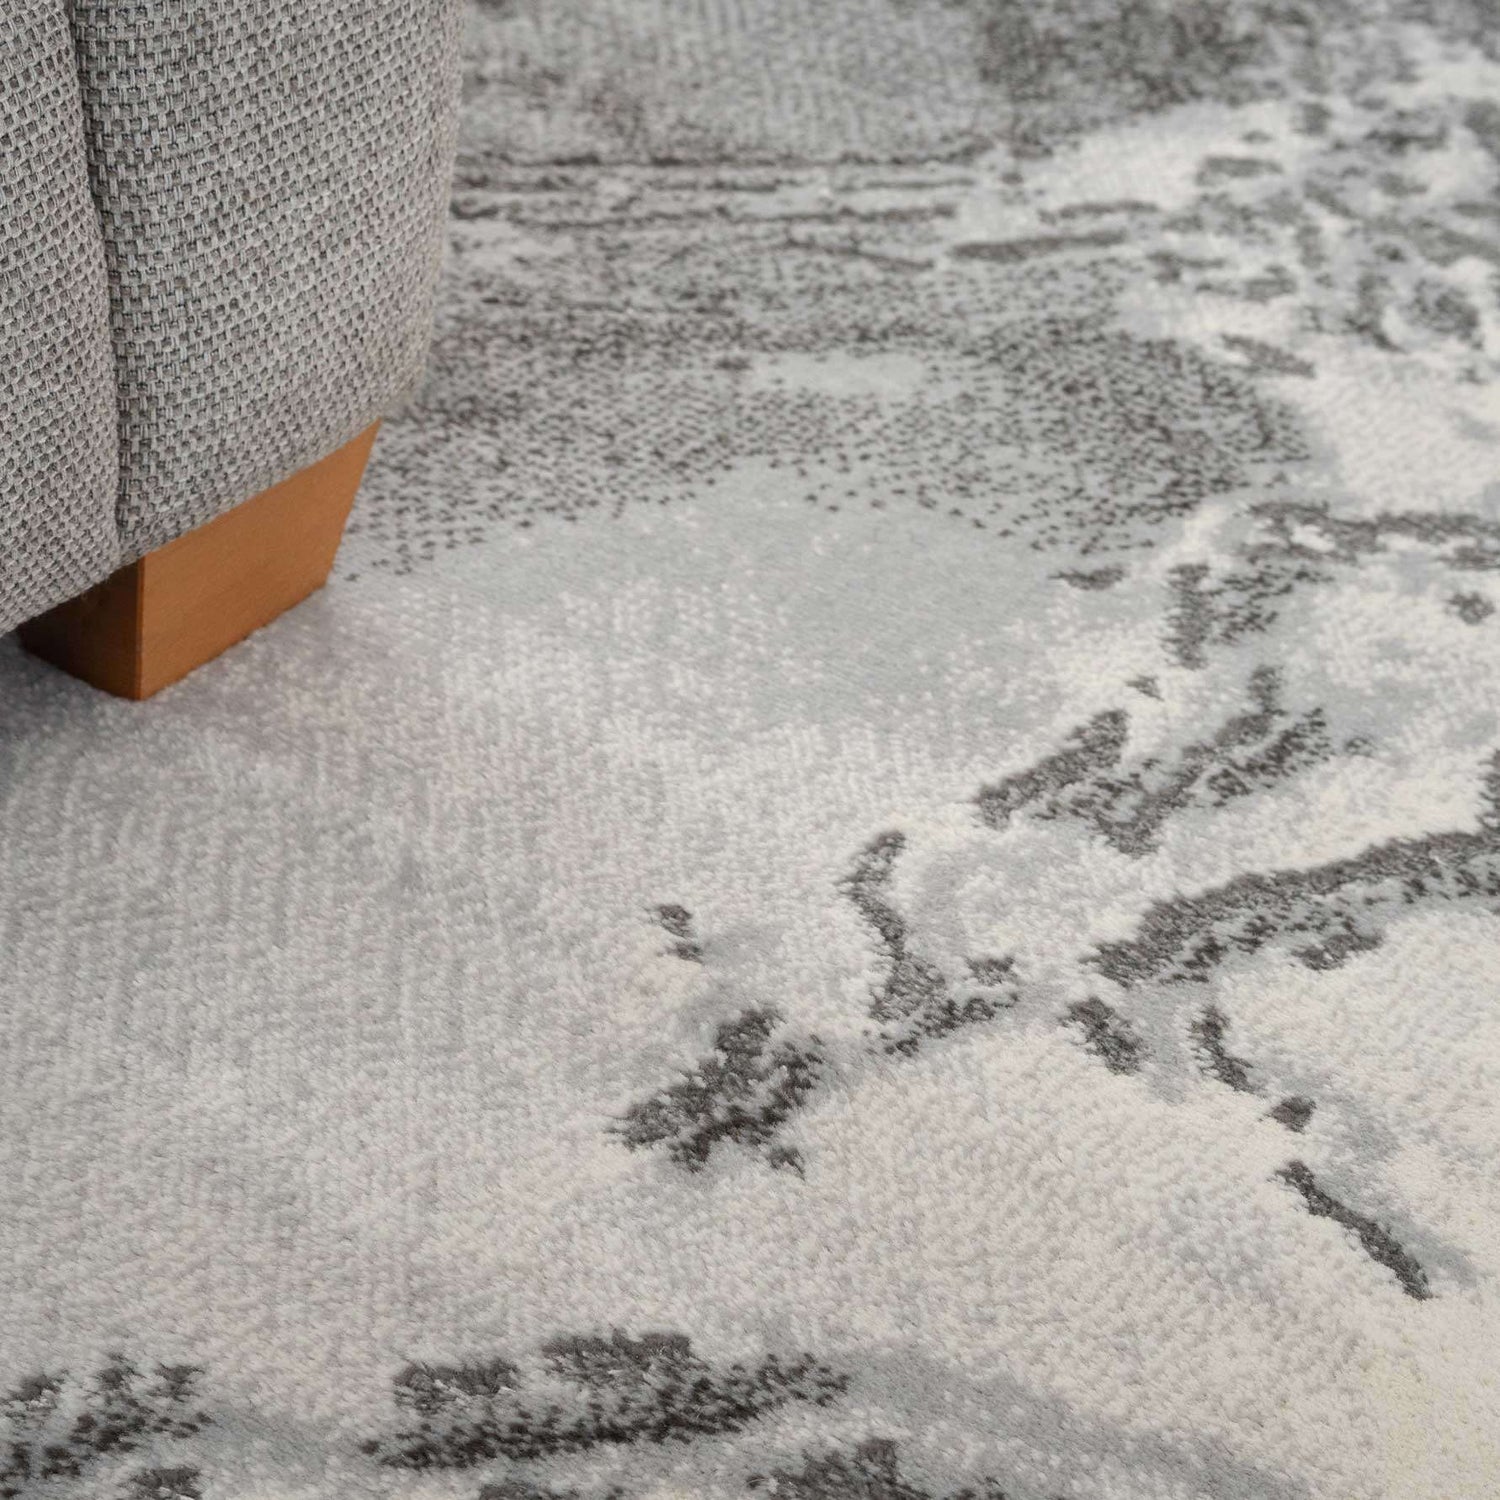 Modern Grey Textured Living Room Rug